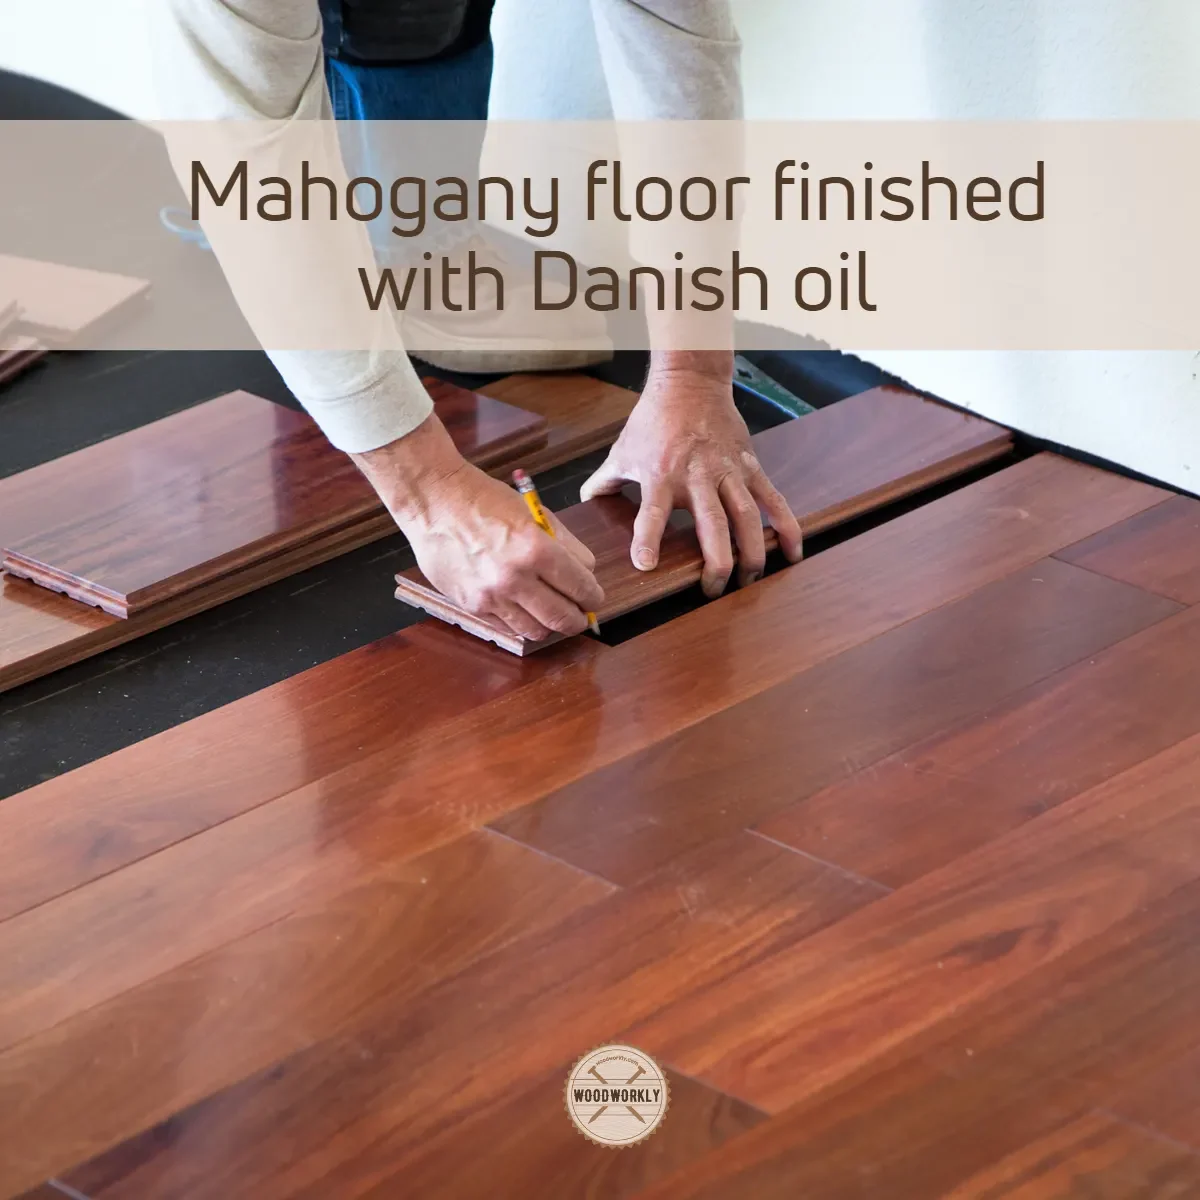 Mahogany floor finished with Danish oil